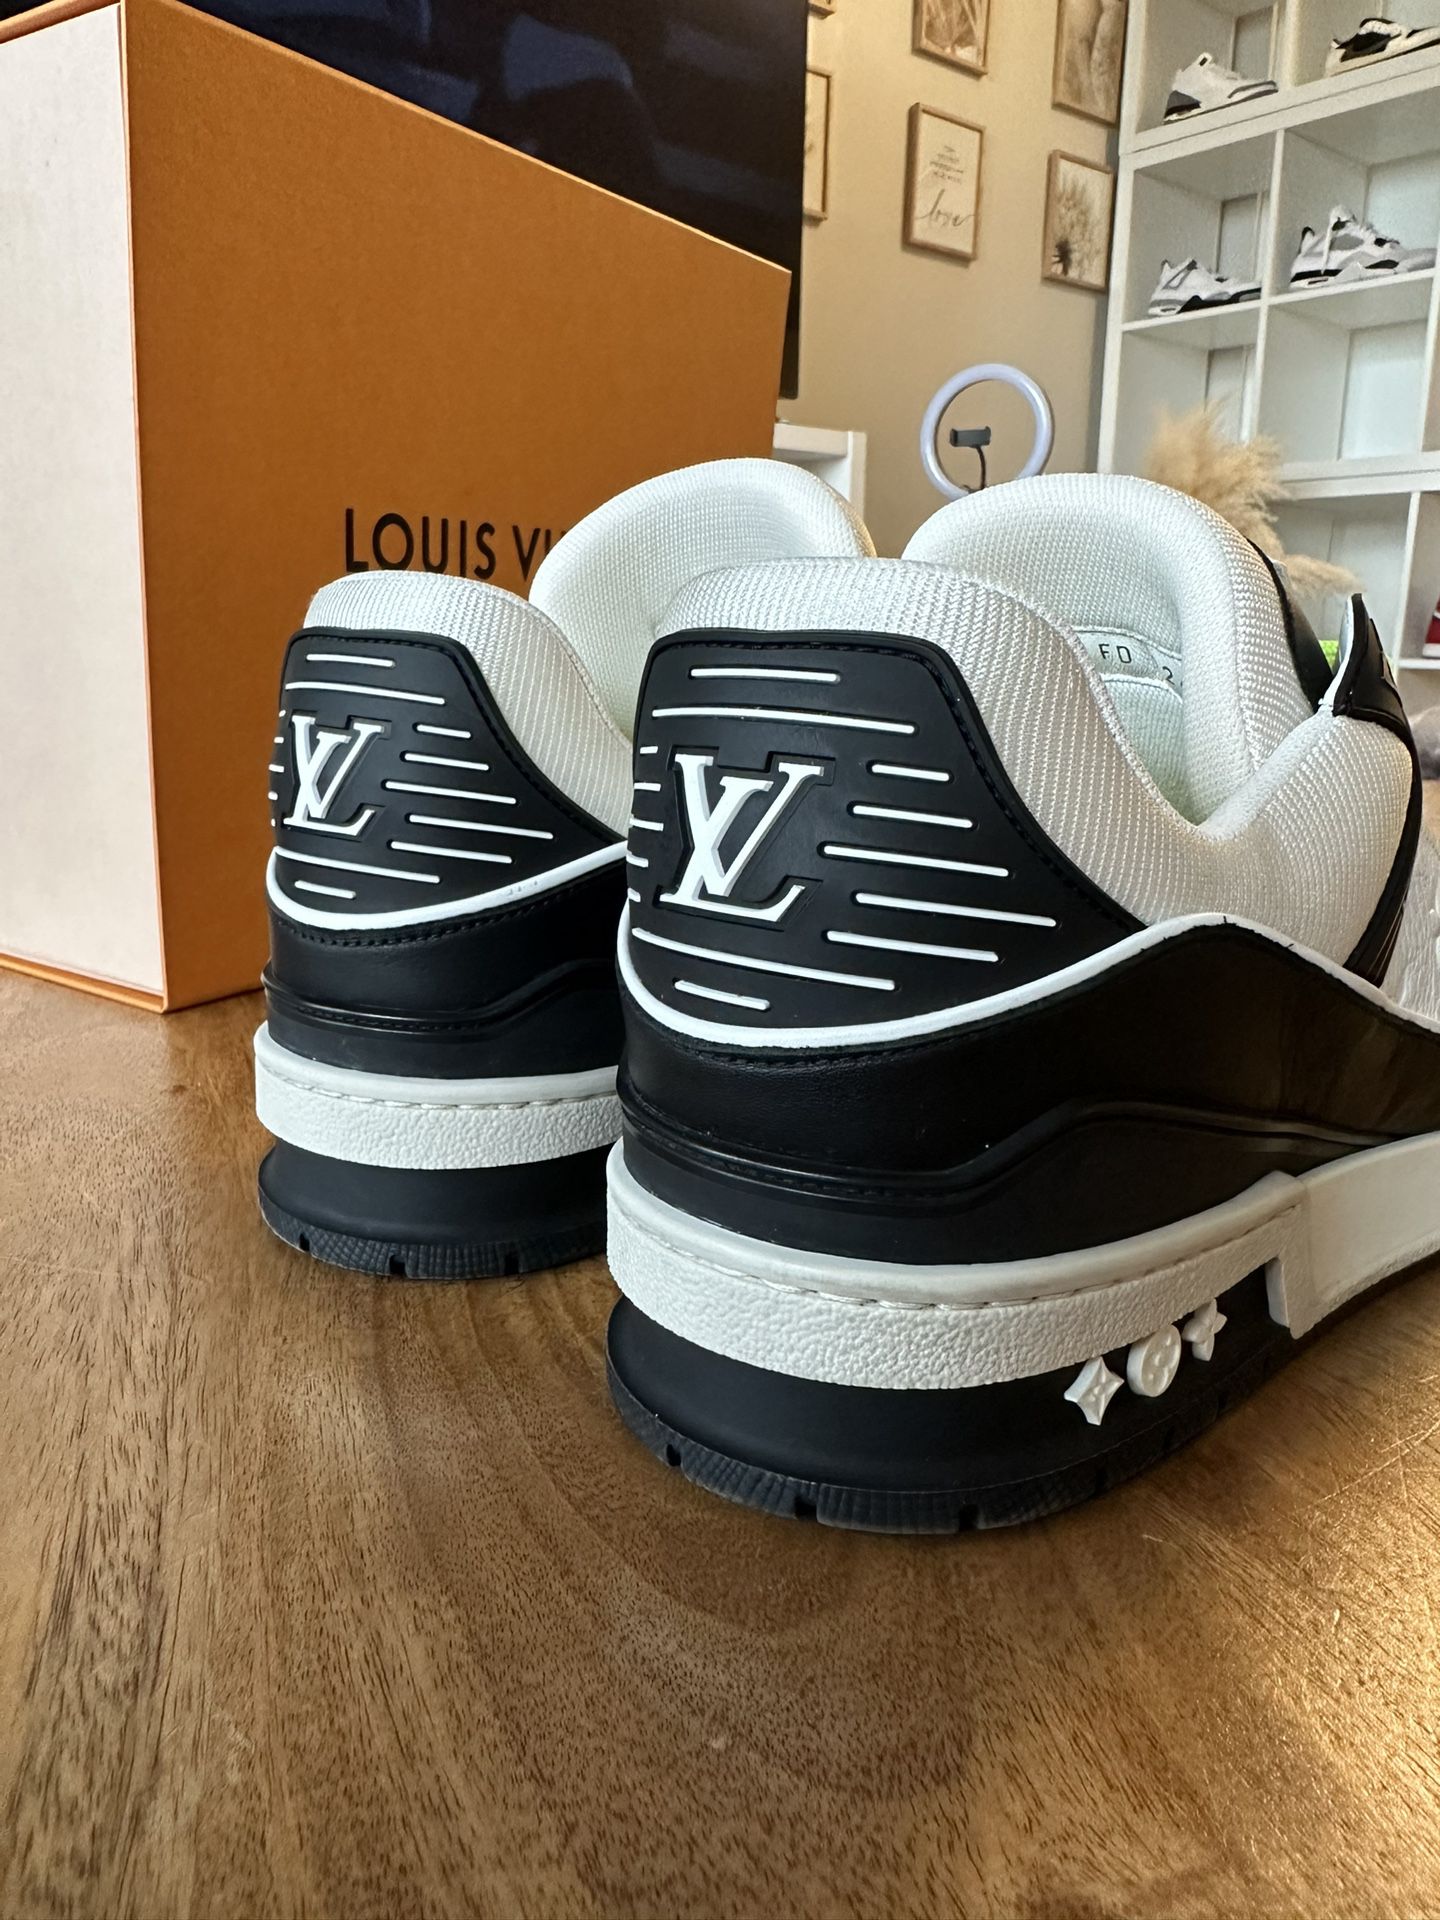 LV Trainer 2 Sz 11 Louis Vuitton Size 11 for Sale in Alsip, IL - OfferUp